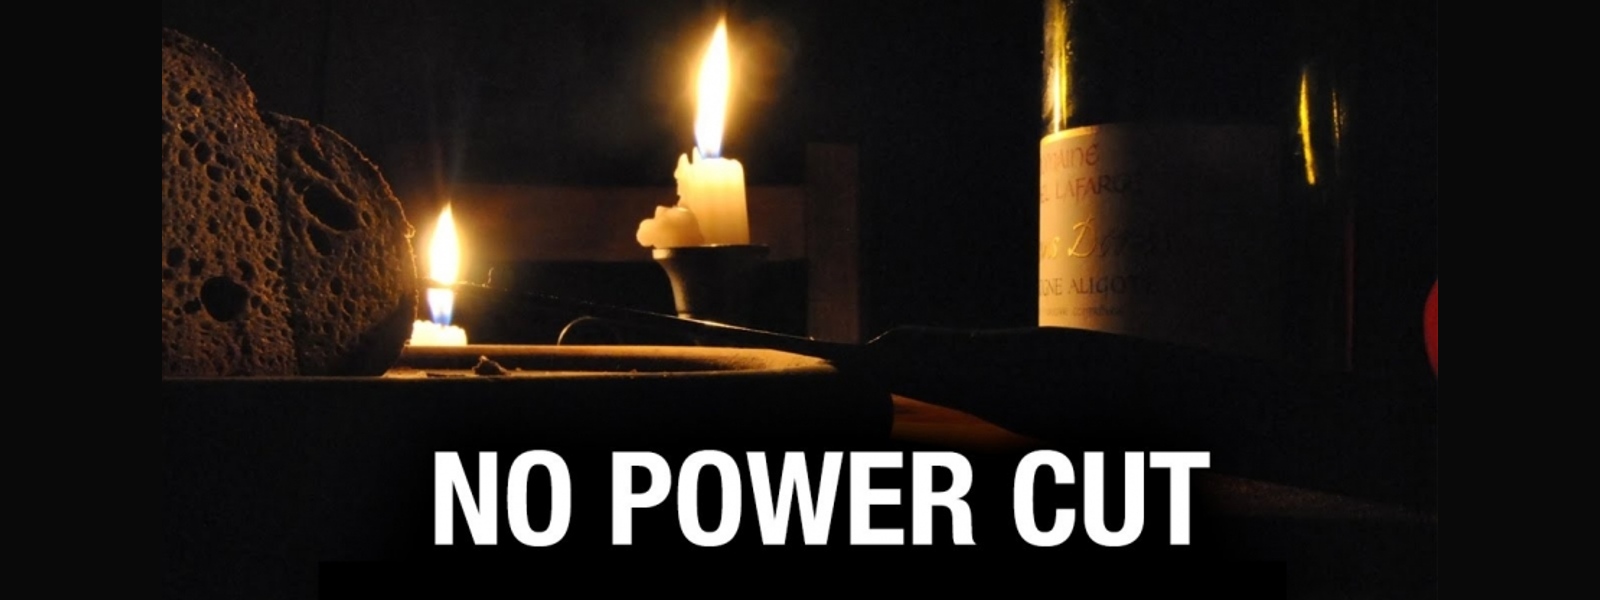 NO power cuts on Vesak Poya Day : PUCSL